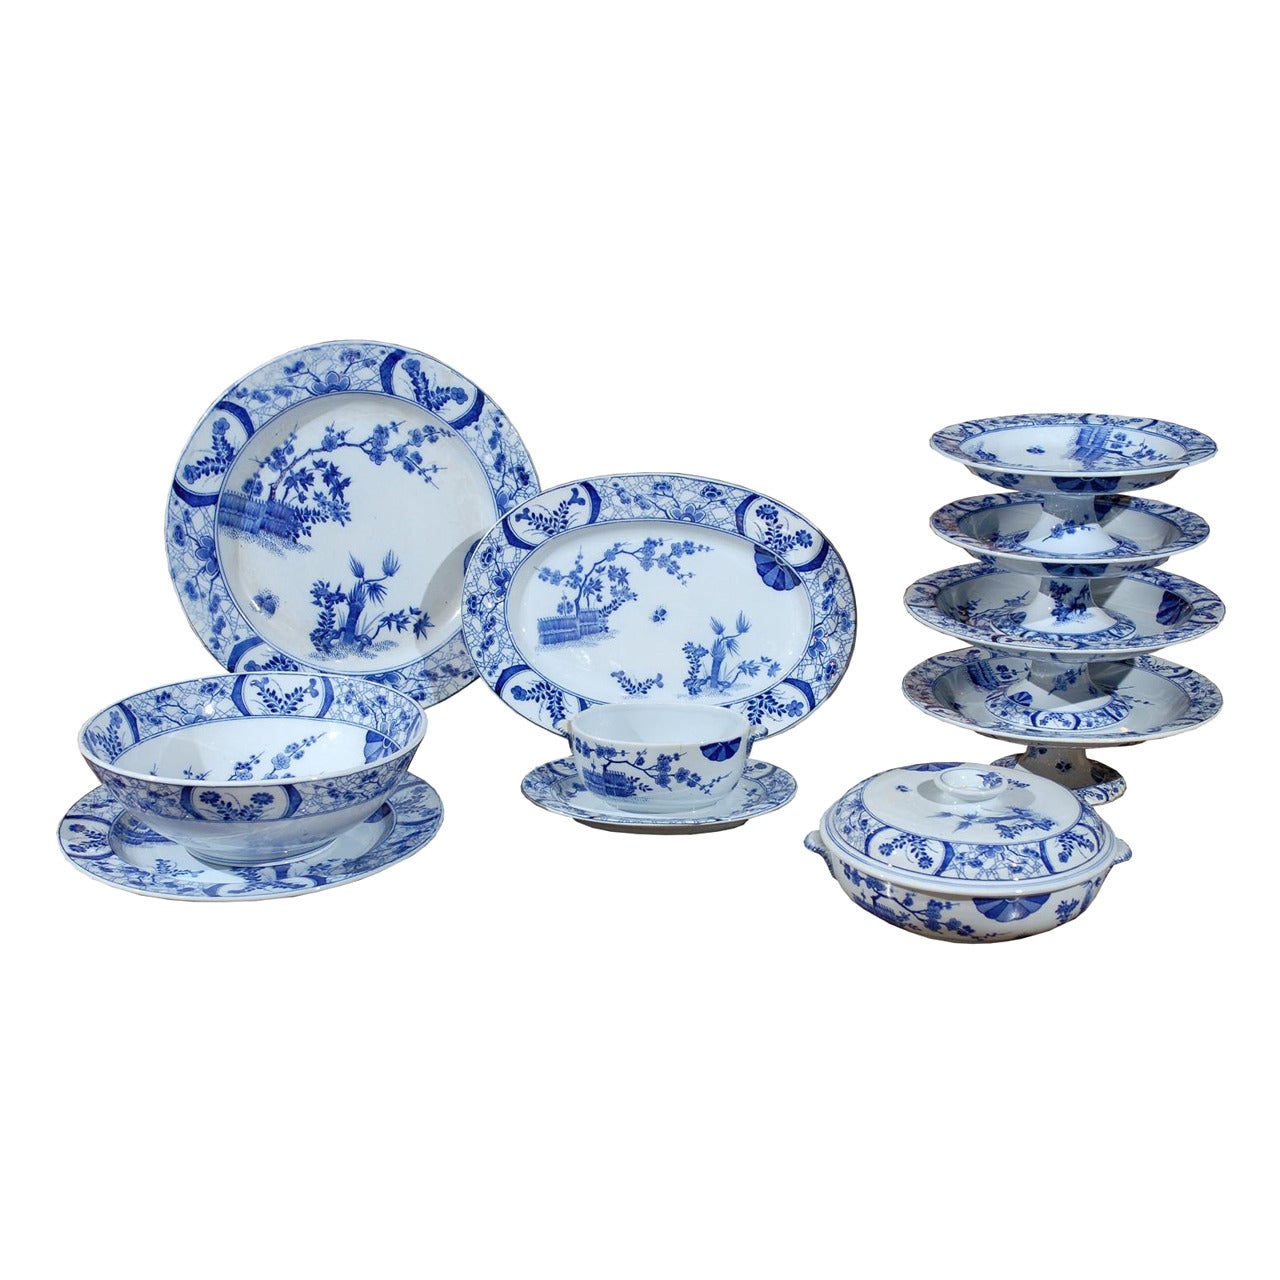 85-Piece Blue and White Japonisme Porcelain Dinnerware Designed by Claude Monet